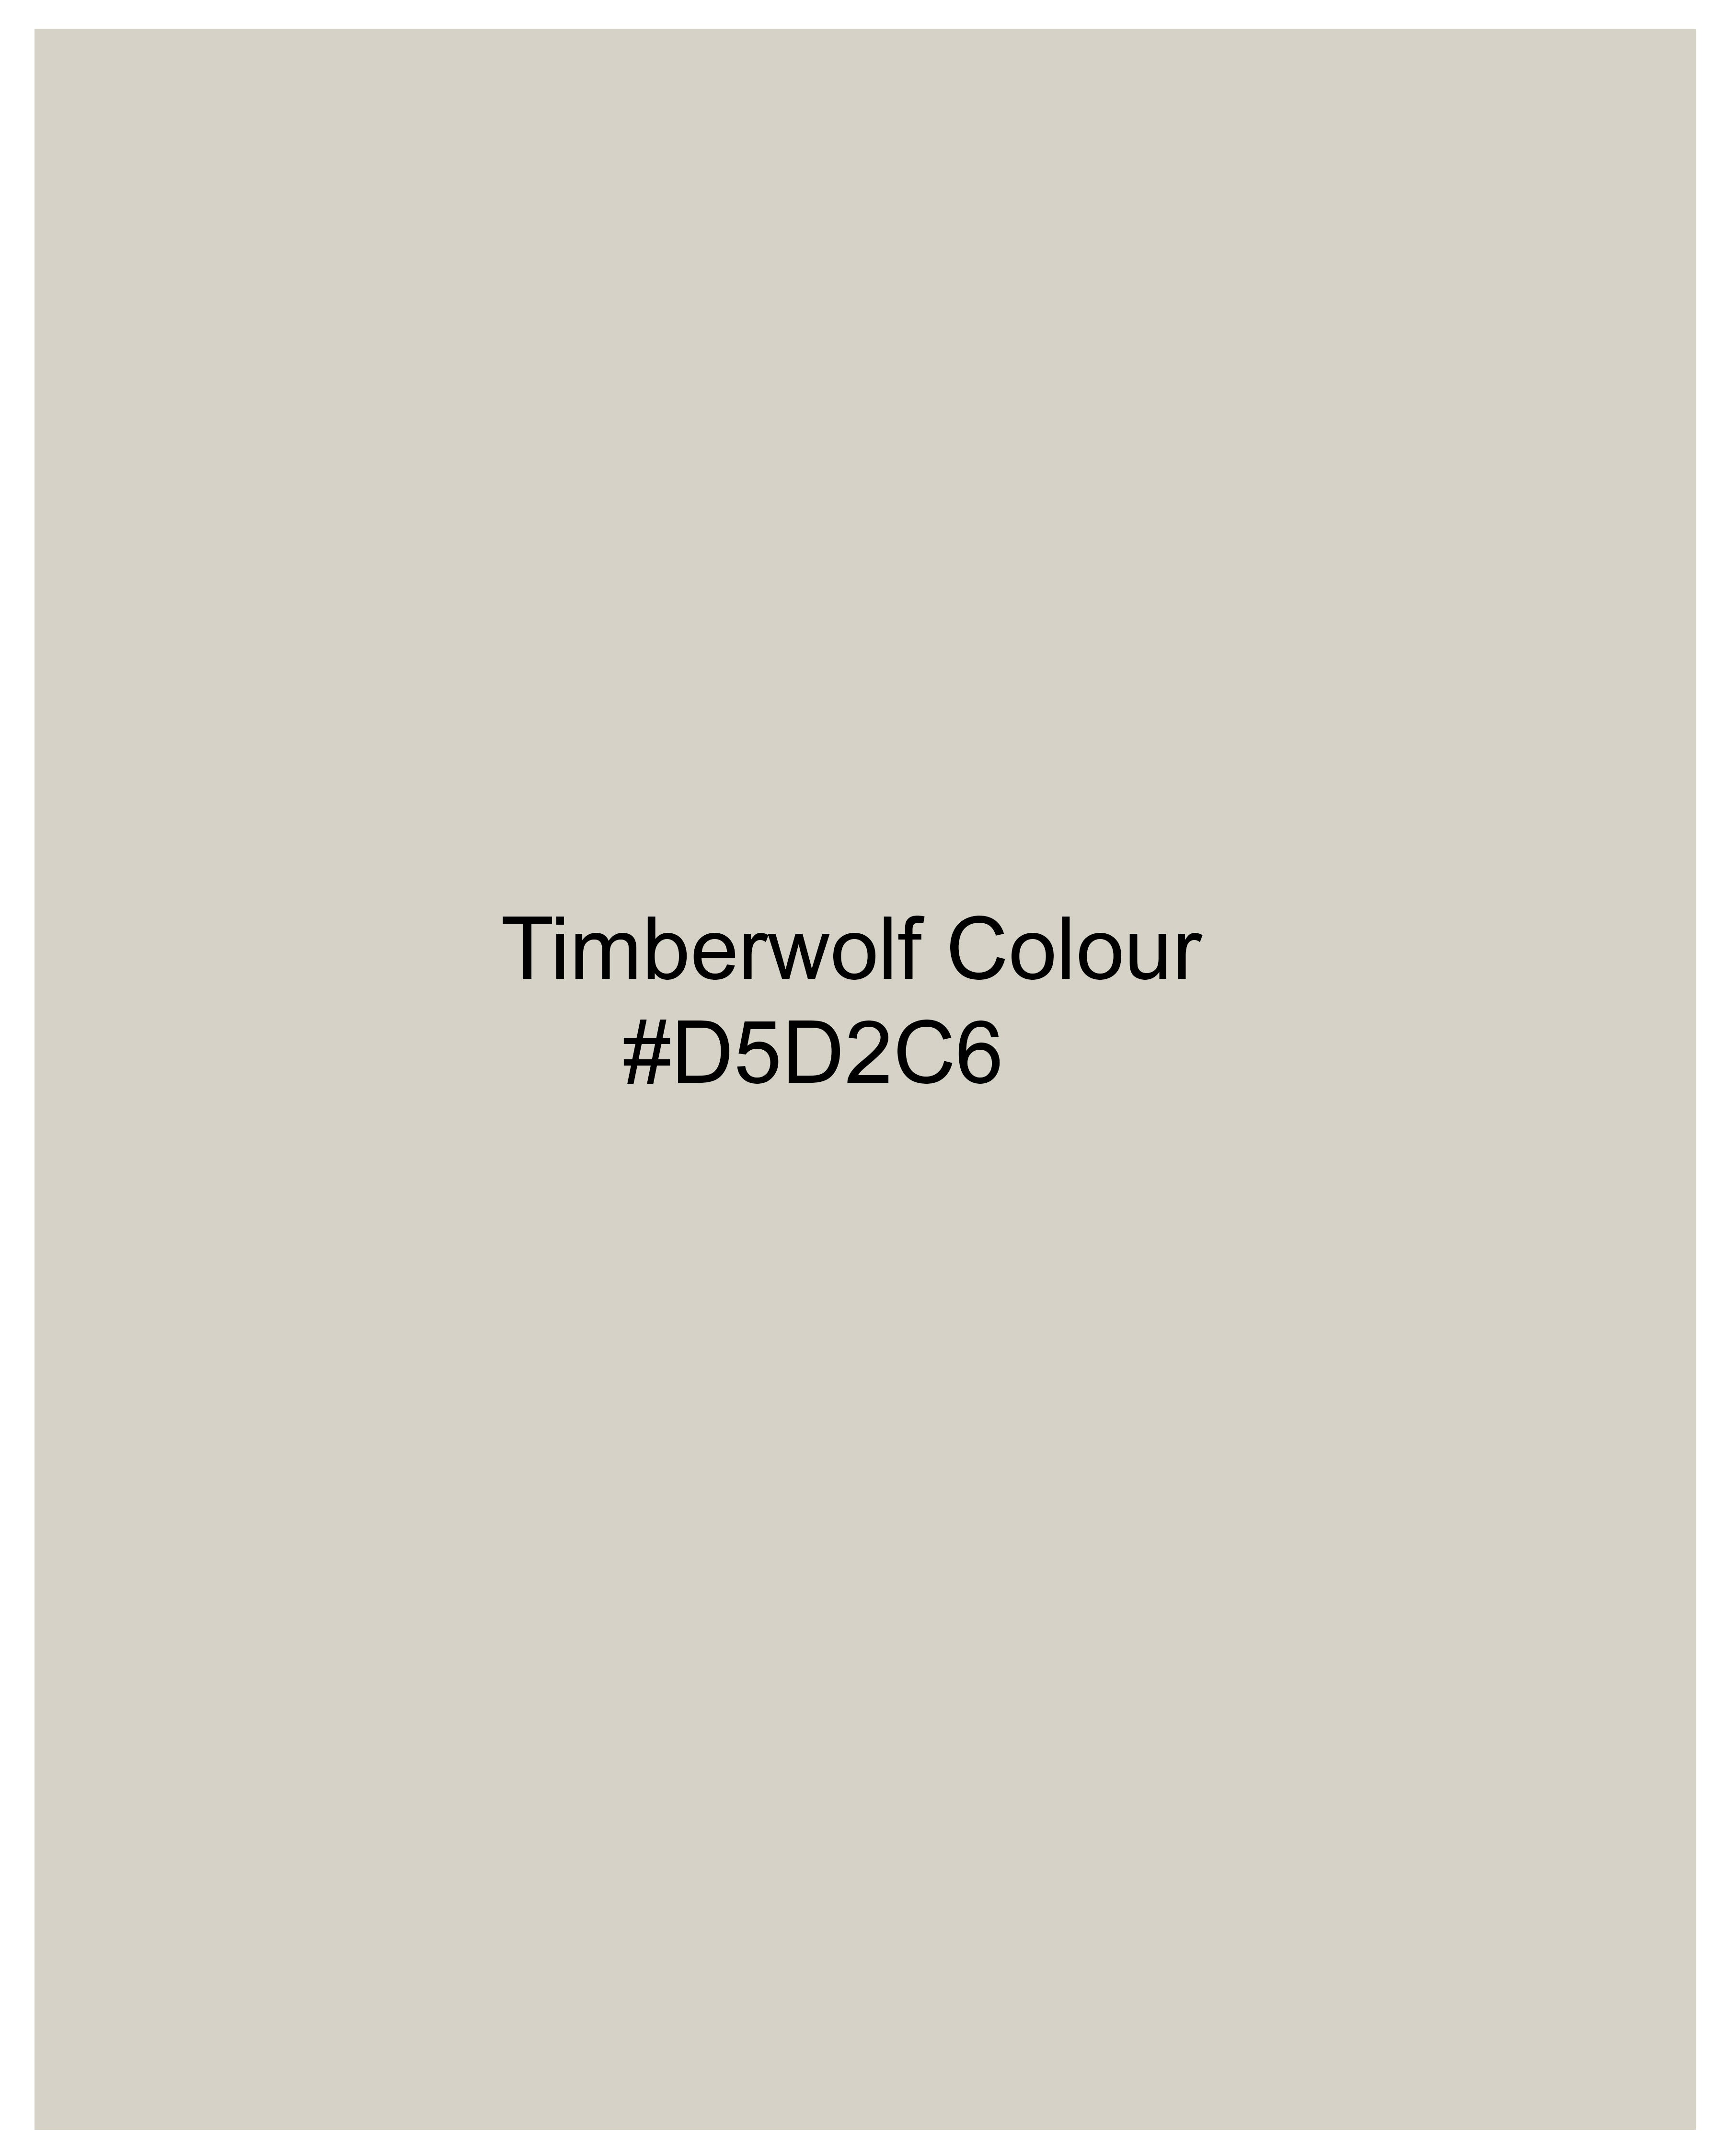 Timberwolf Gray Jumpsuit WD013-32, WD013-34, WD013-36, WD013-38, WD013-40, WD013-42